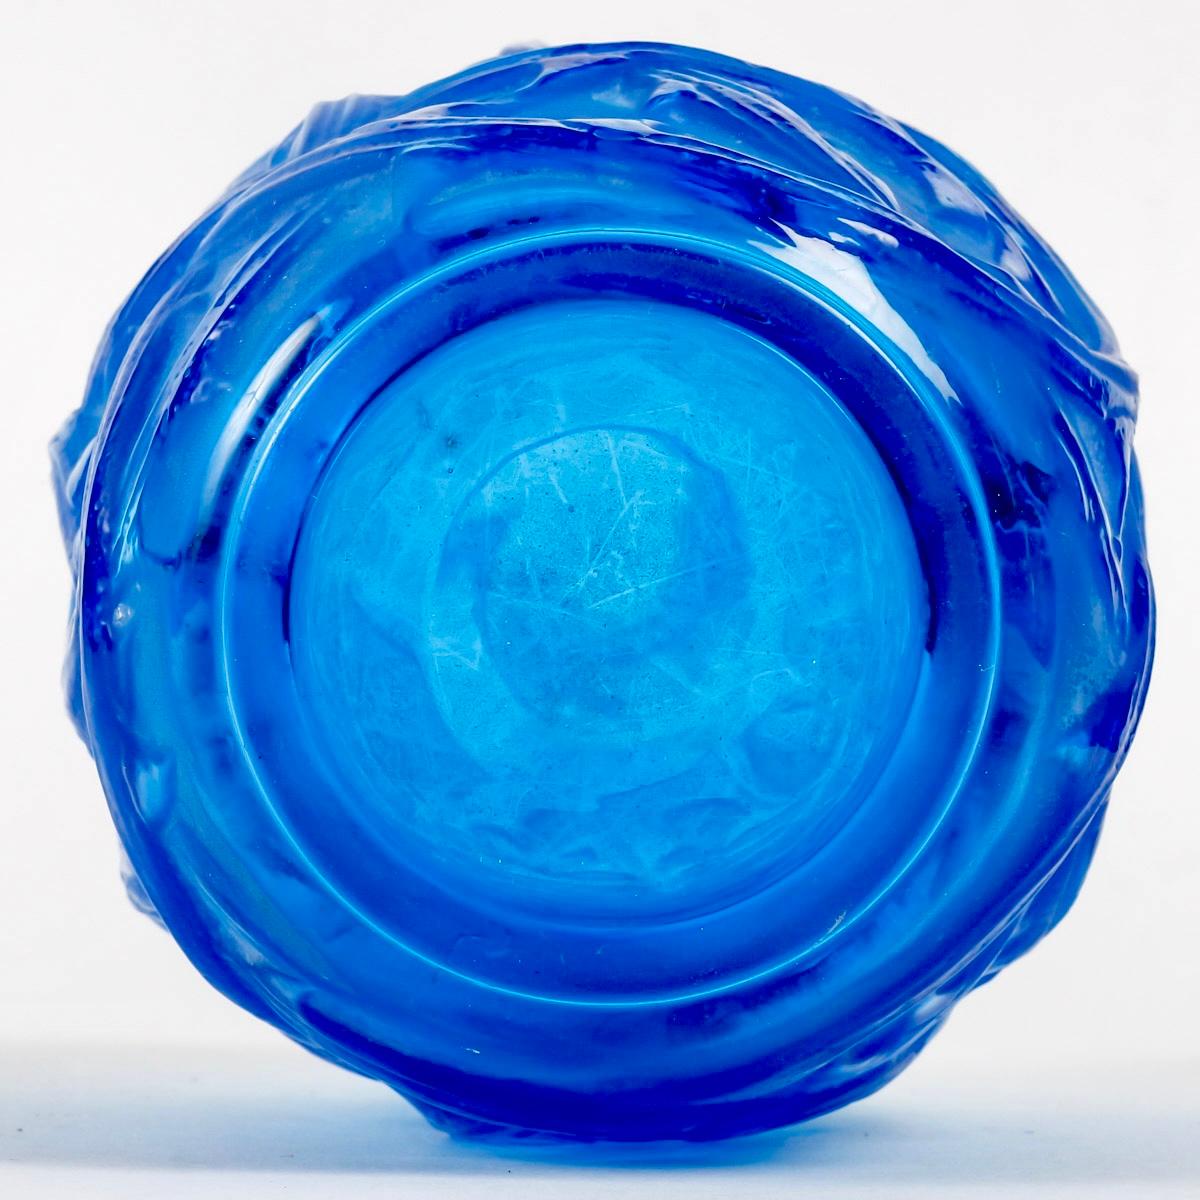 Molded 1921 René Lalique - Vase Ronces Electric Blue Glass With WhitePatina